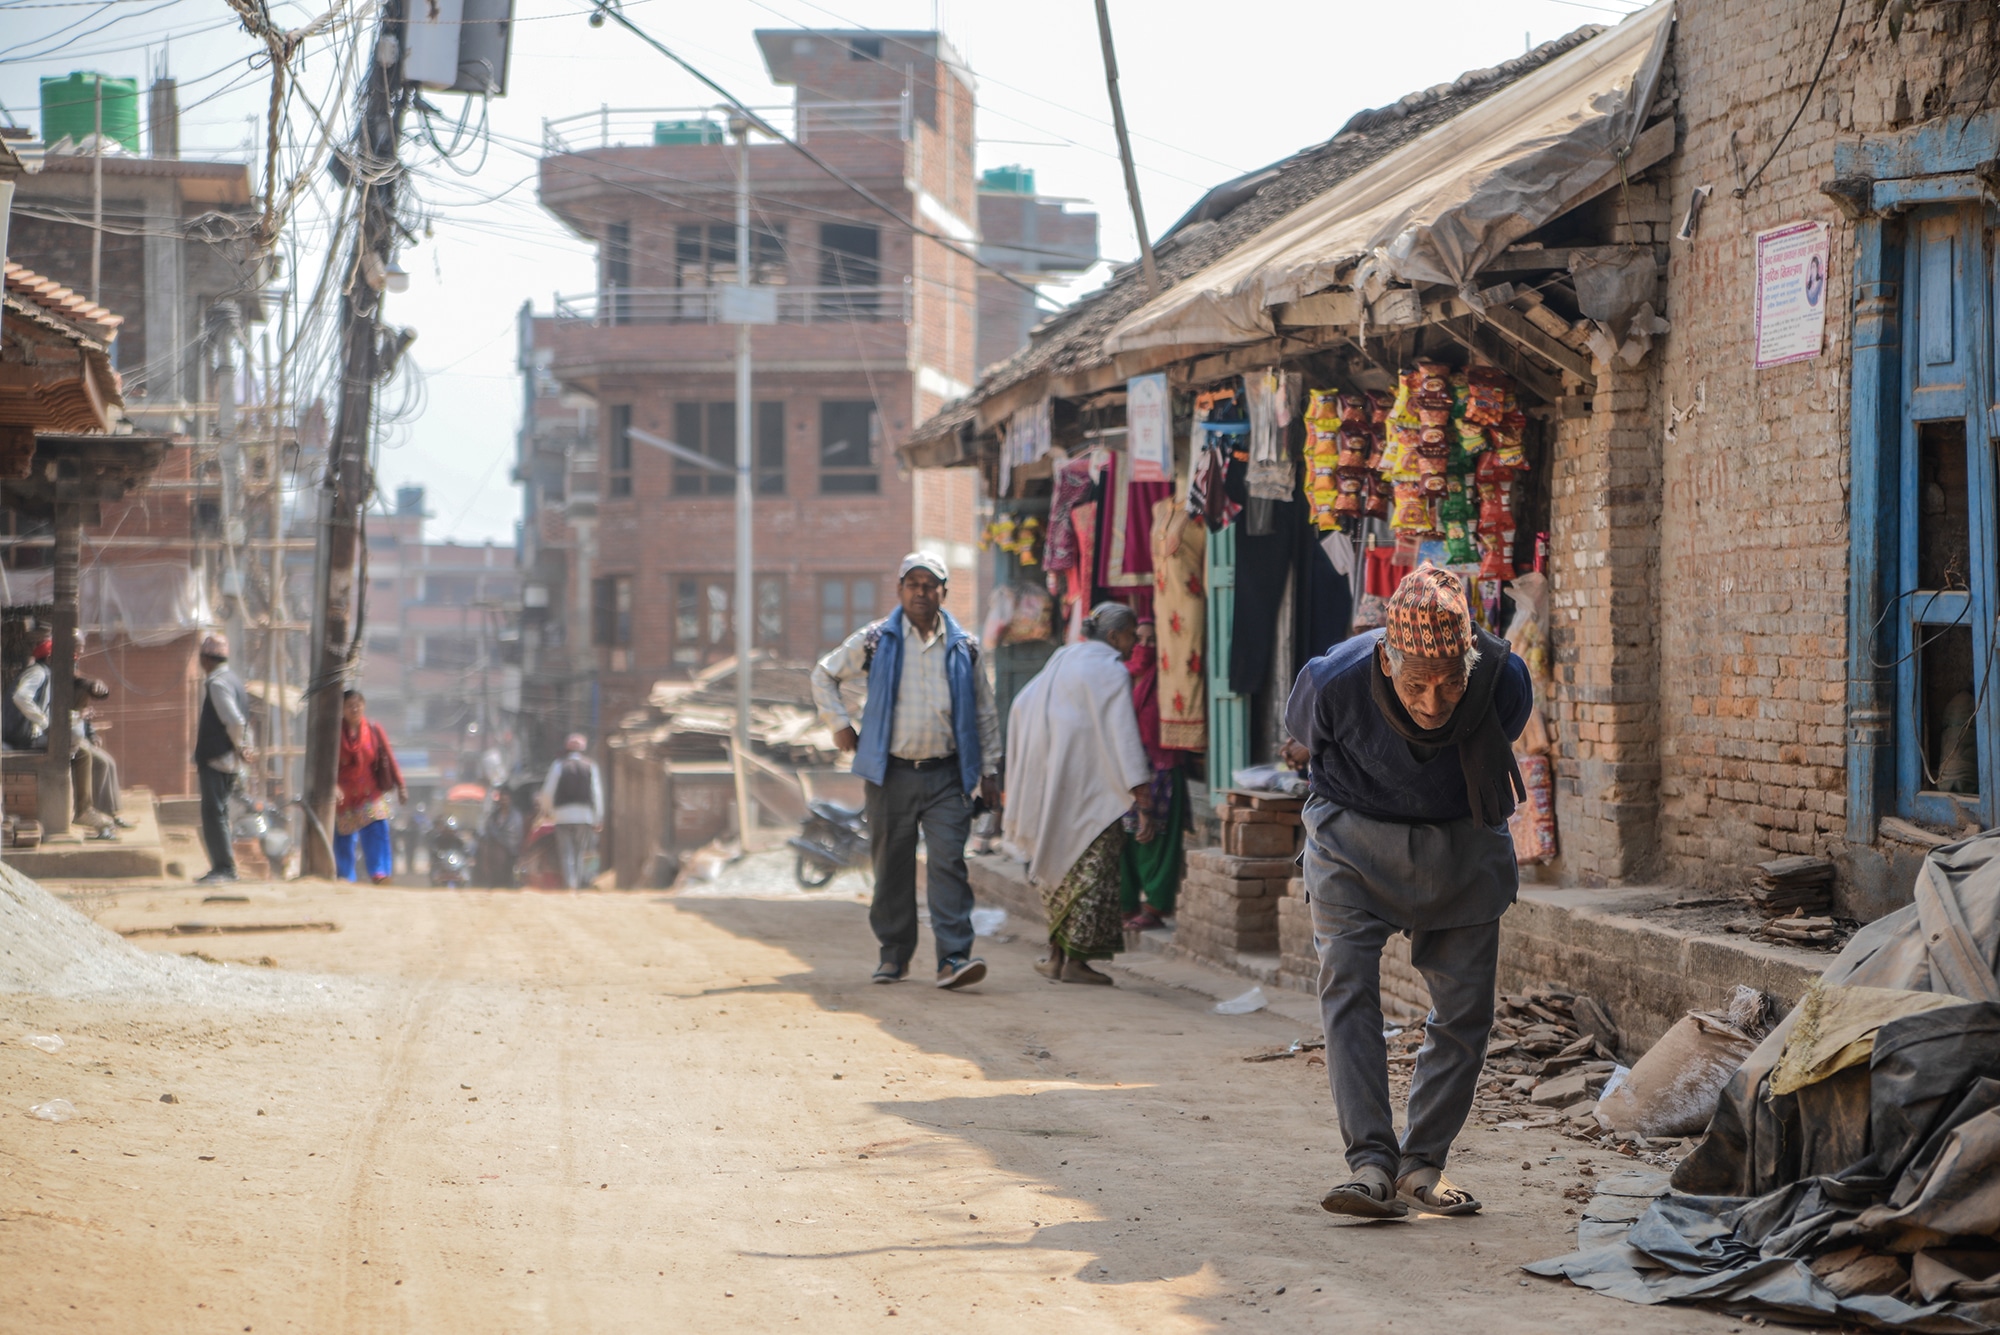 Un vieillard à Bhaktapur au Népal